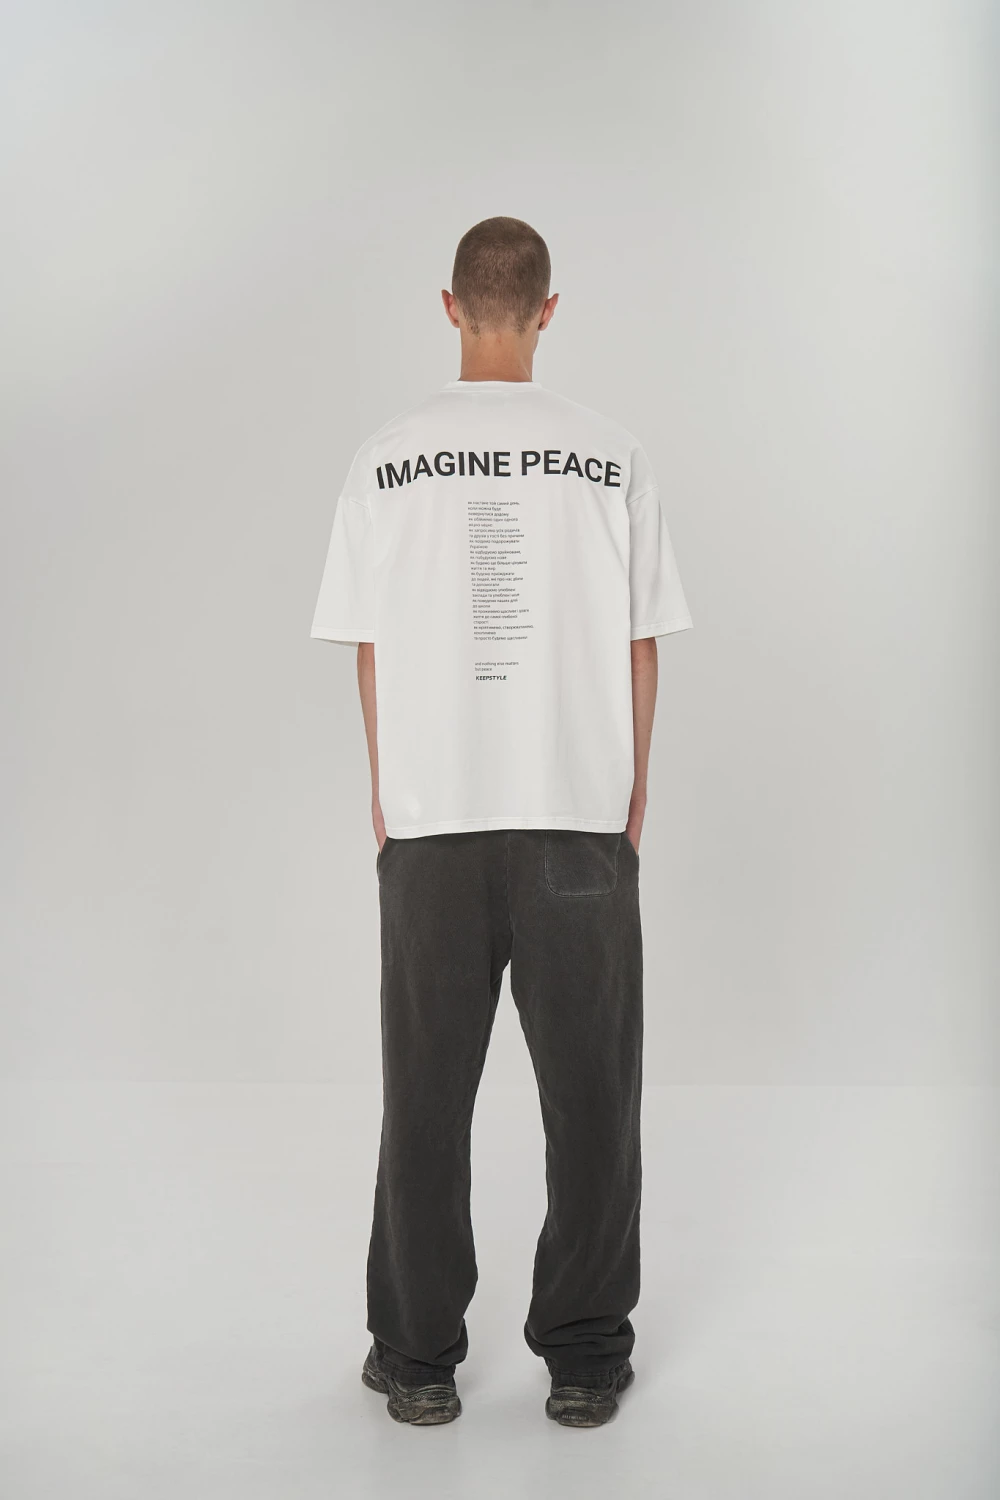 imagine peace t-shirt in vanilla color